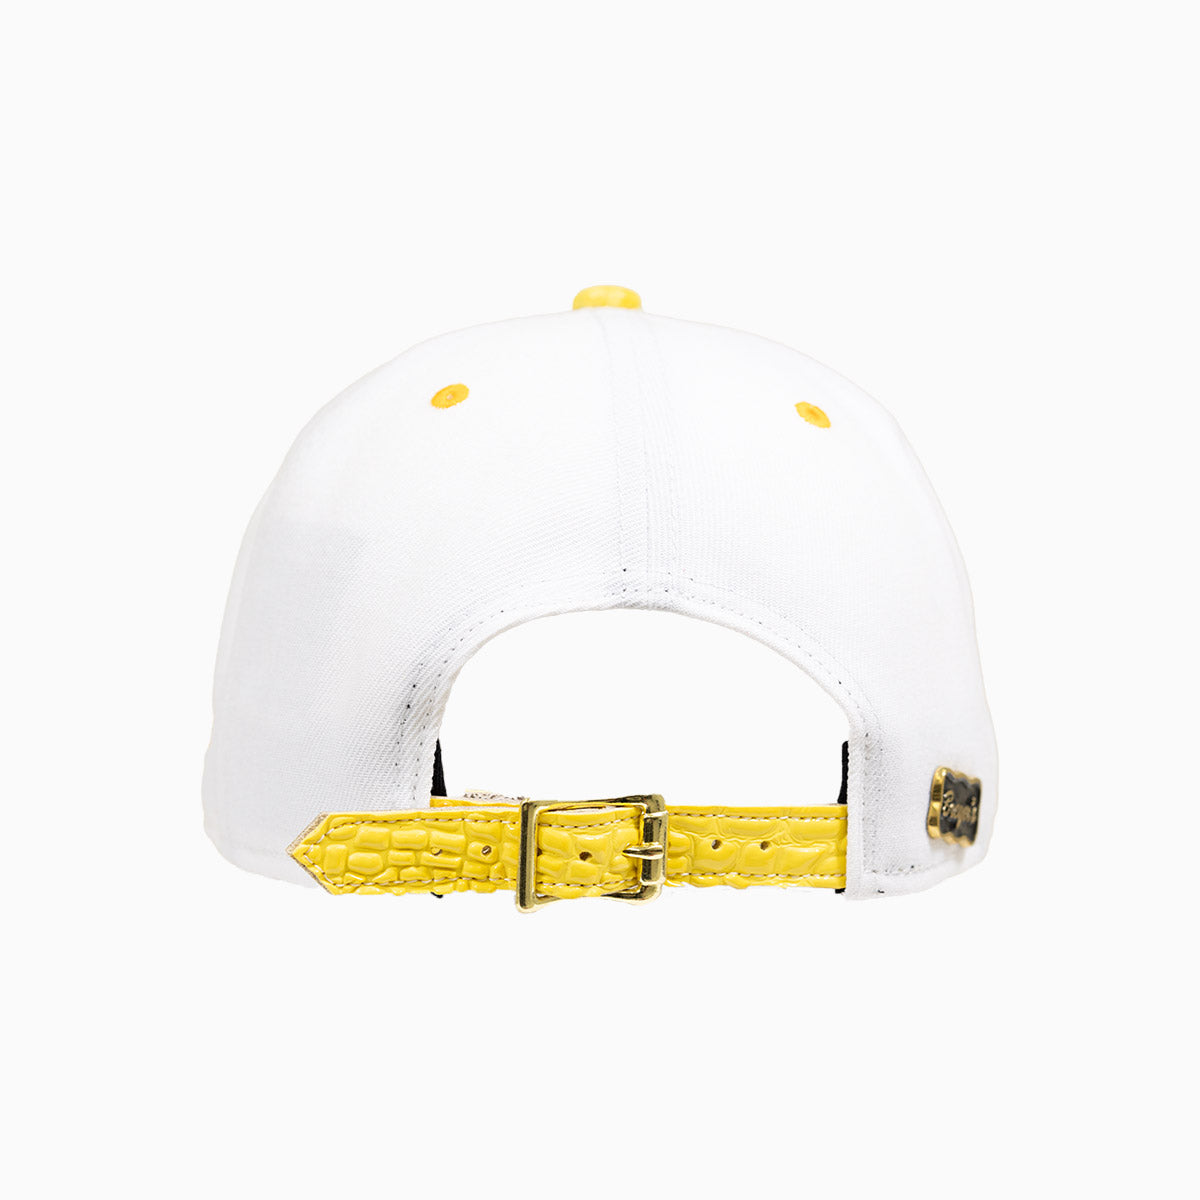 breyers-buck-50-chicago-bulls-hat-with-leather-visor-breyers-tcbh-white-yellow